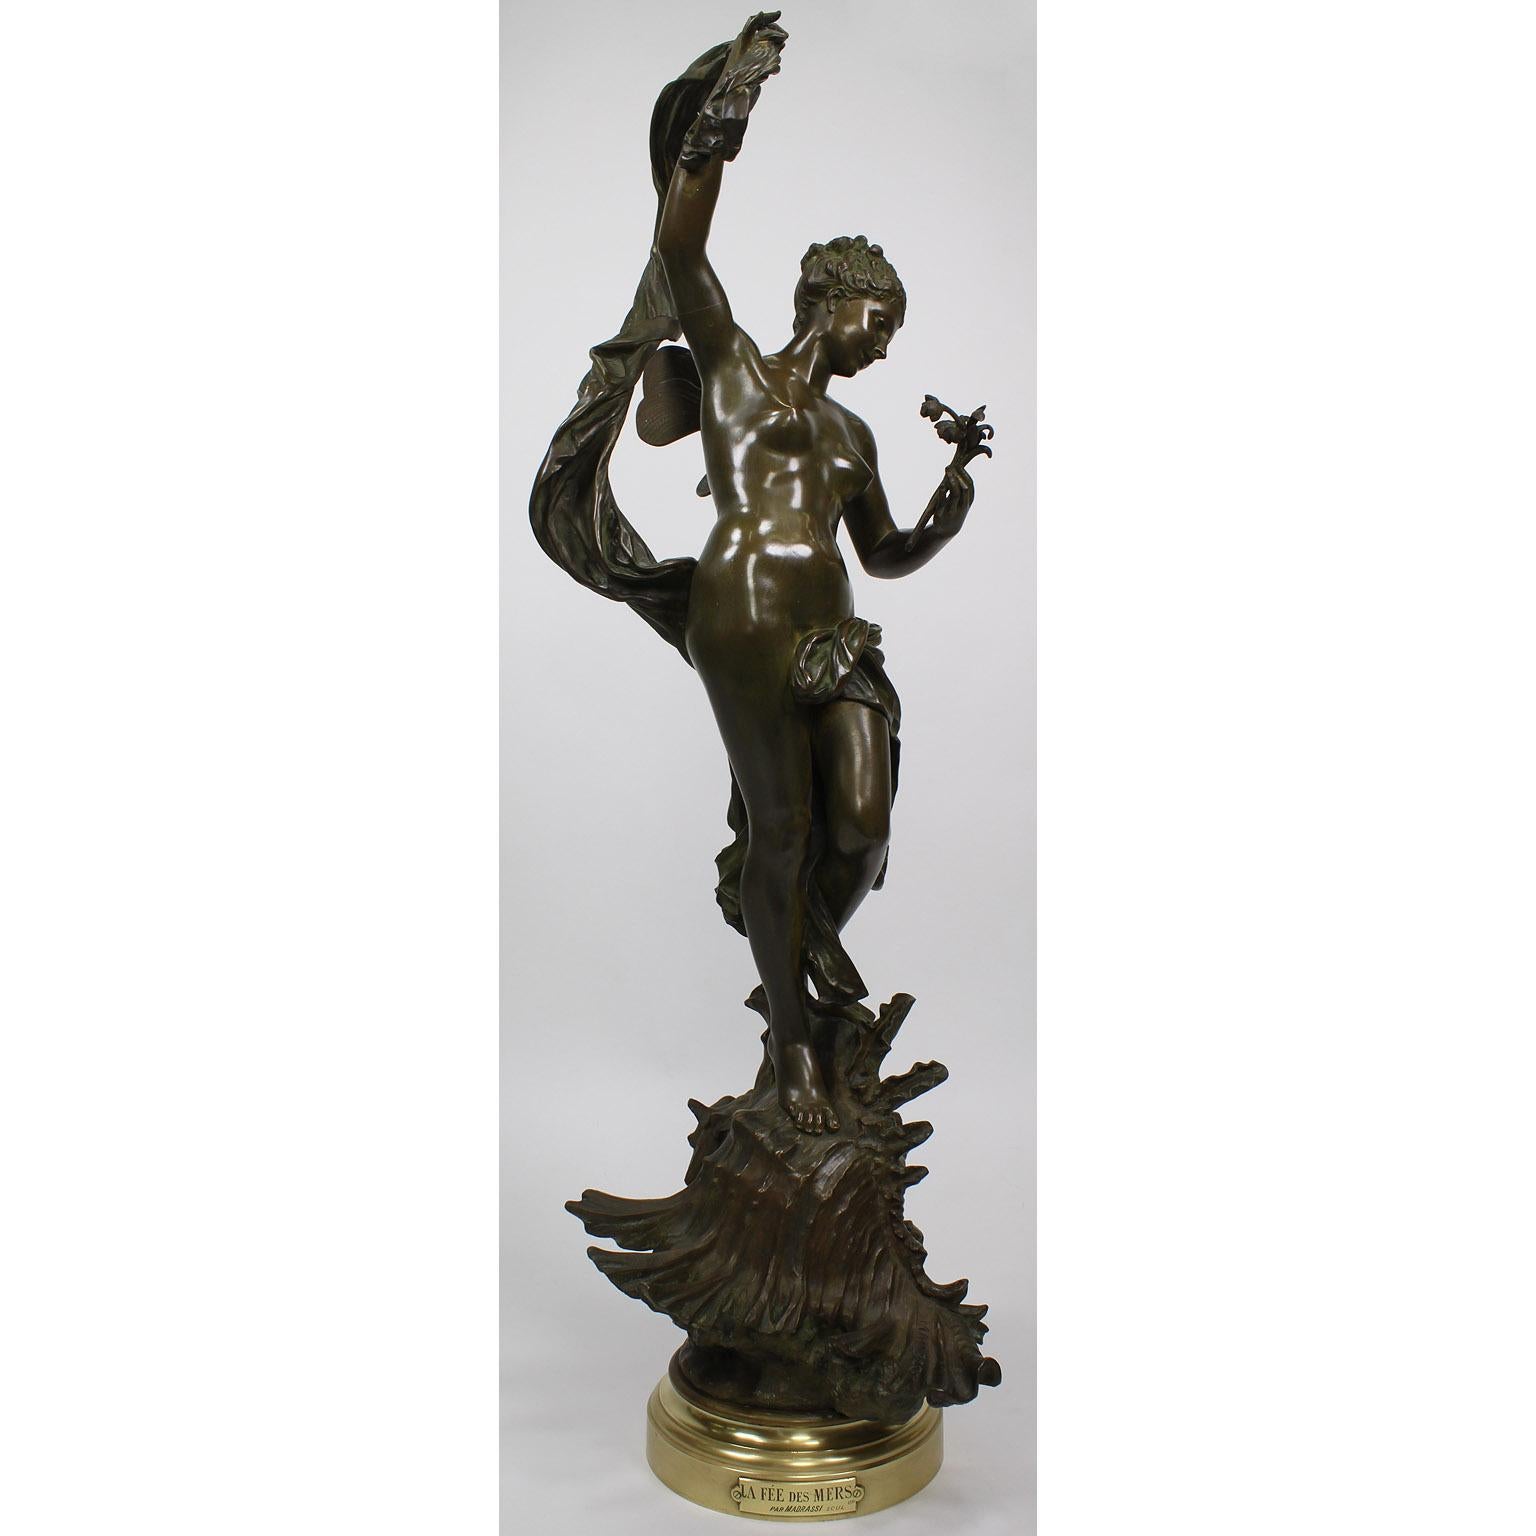 A fine Italian 19th-20th century patinated bronze figure of 